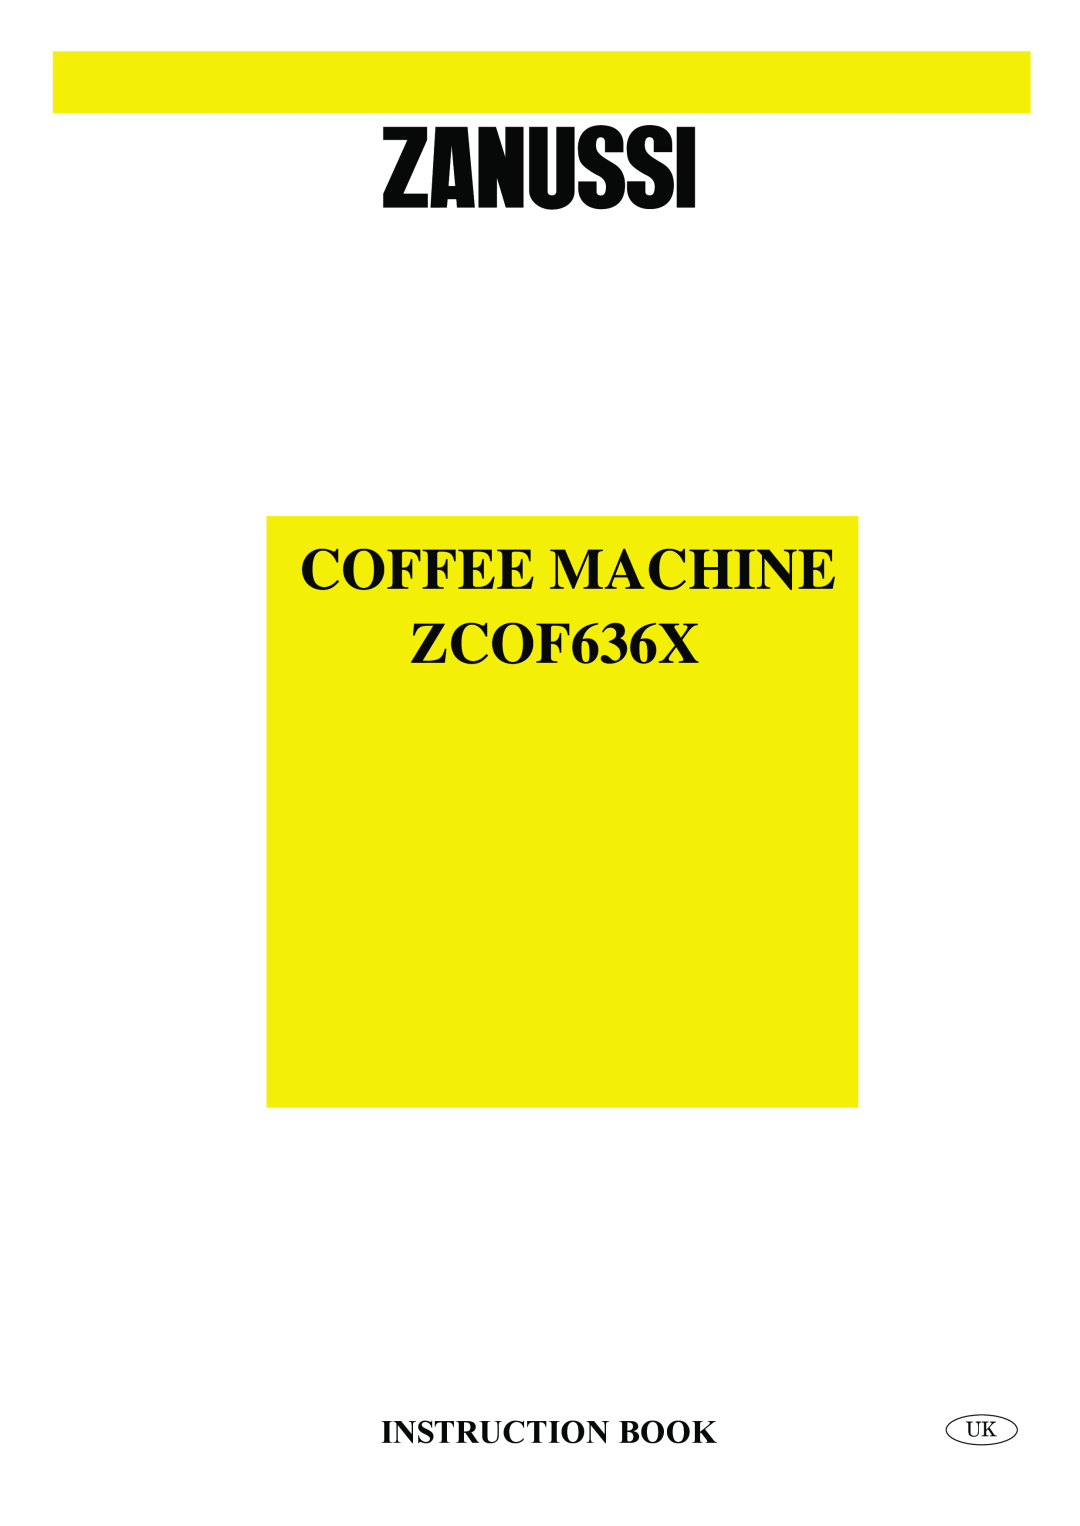 Zanussi manual COFFEE MACHINE ZCOF636X, Instruction Book 